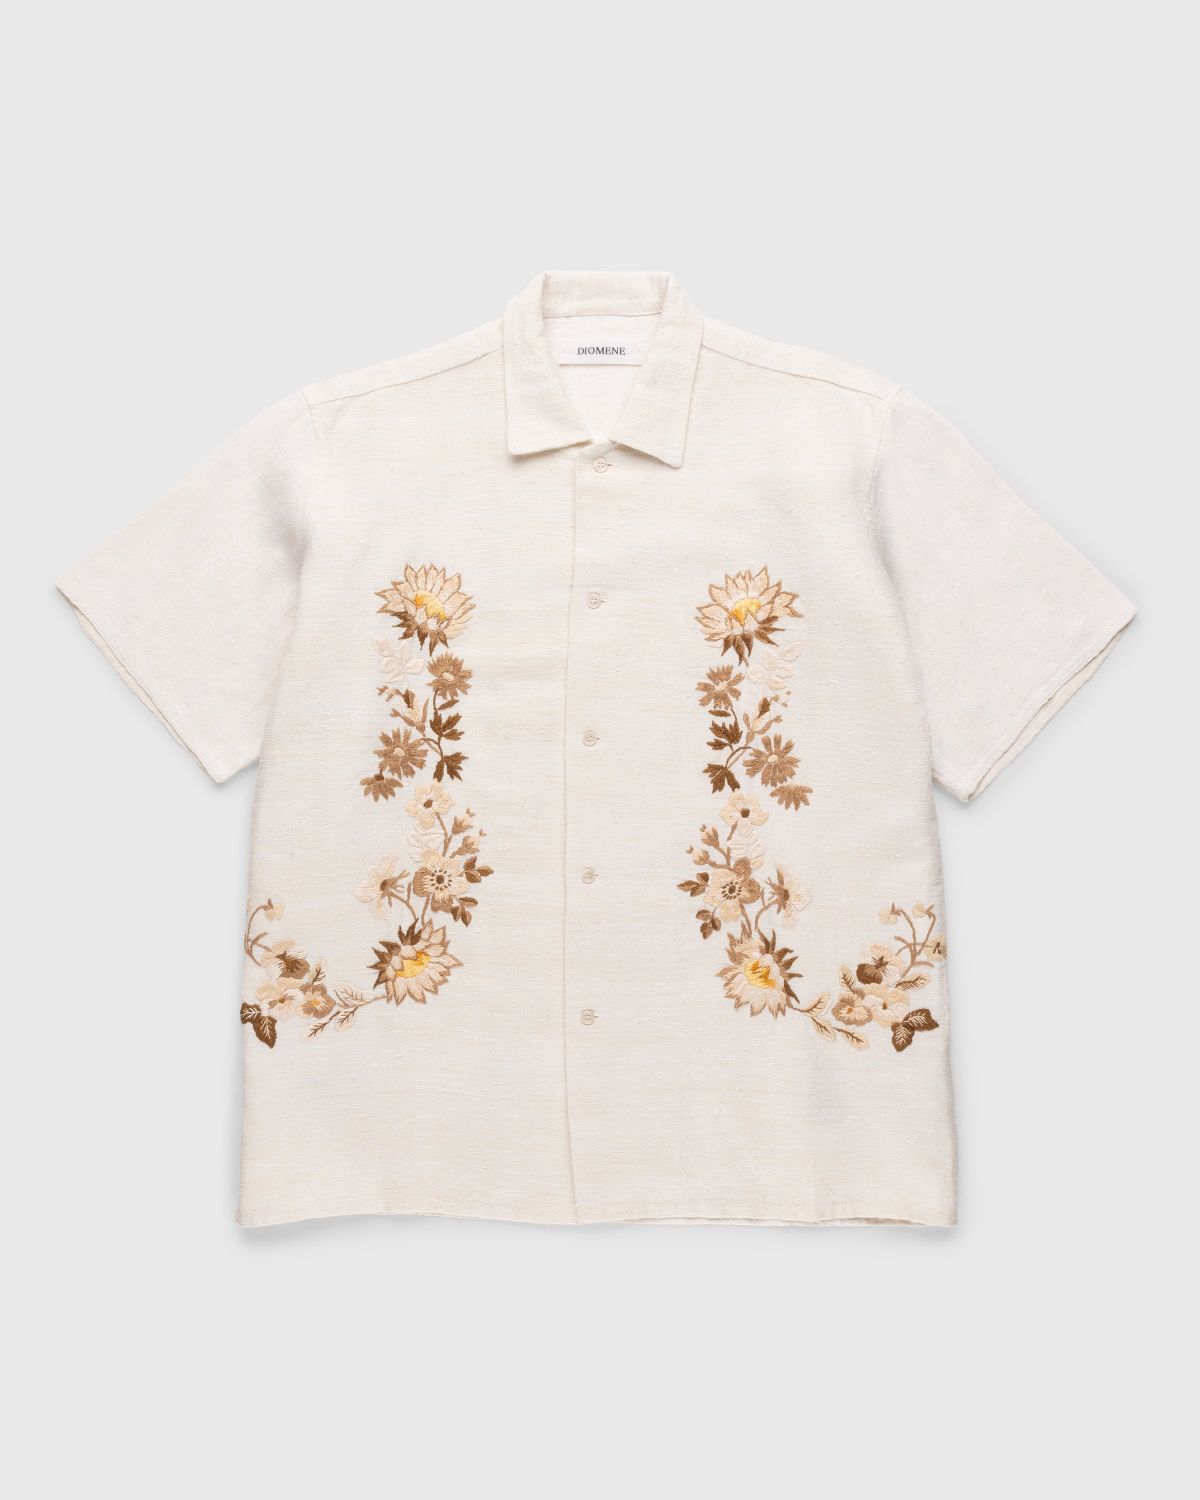 Diomene by Damir Doma – Embroidered Vacation Shirt Cream - Shortsleeve Shirts - White - Image 1